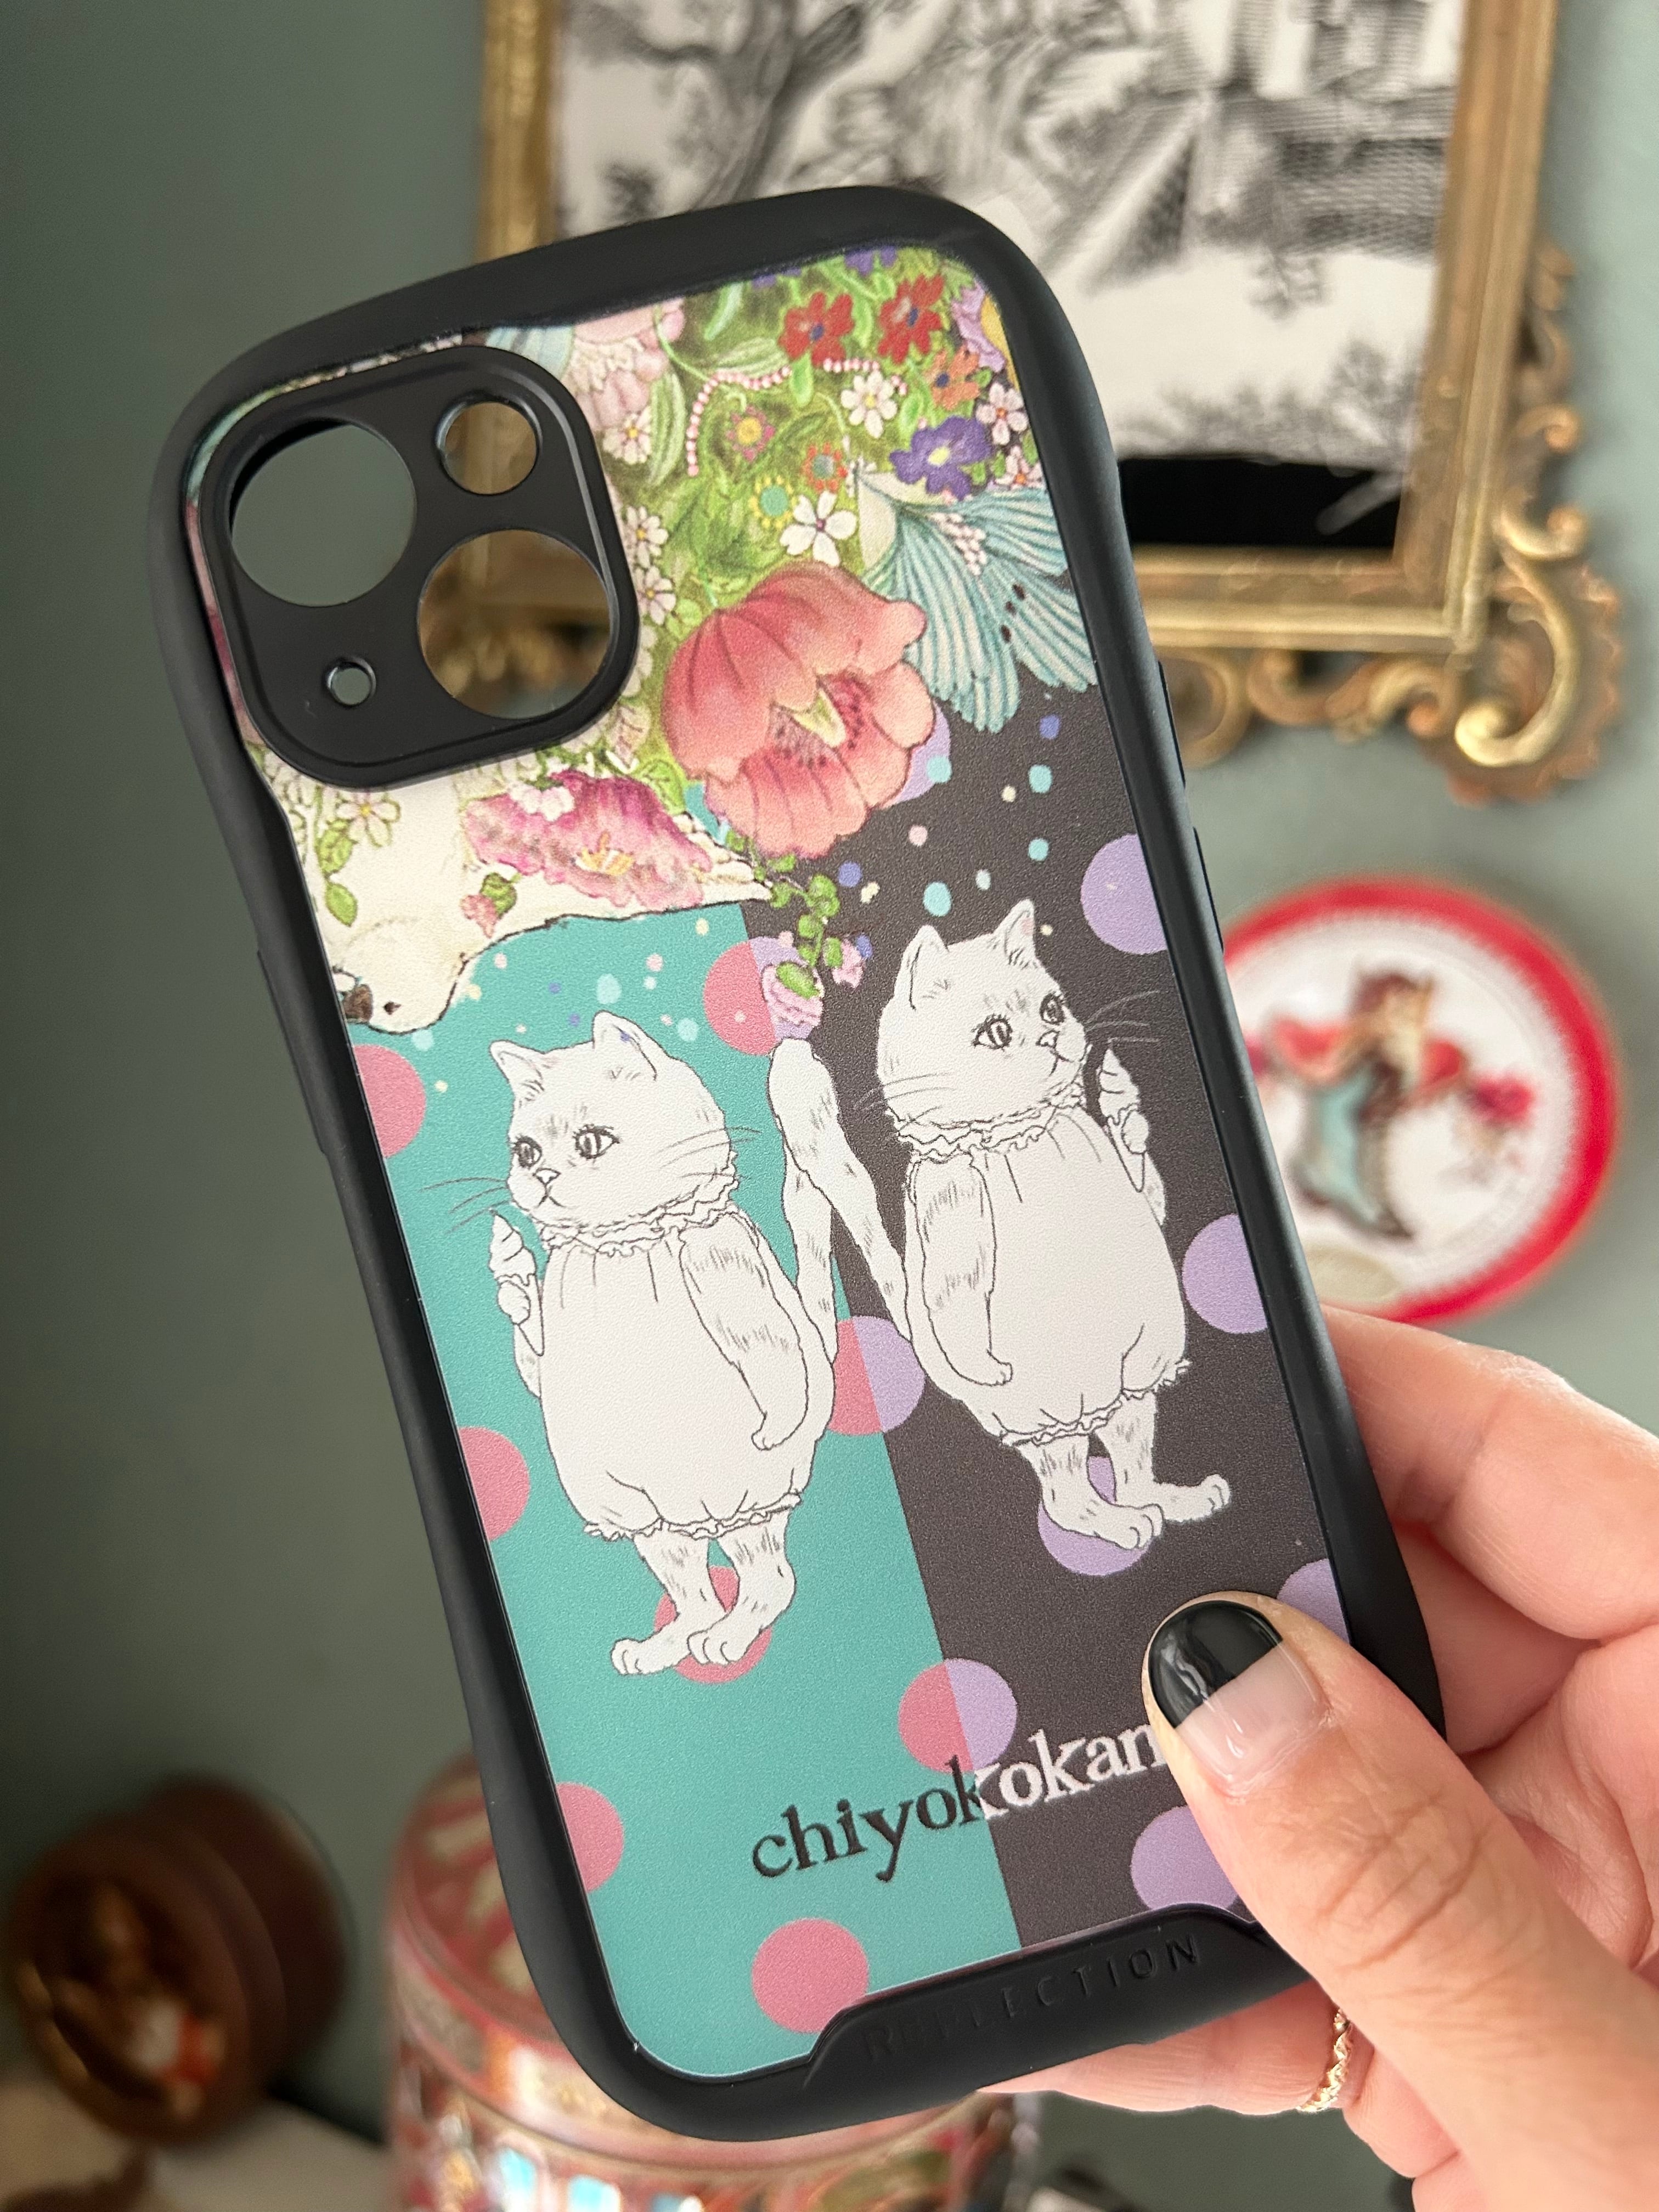 iPhone case|クレイジーキャット|chiyokokana